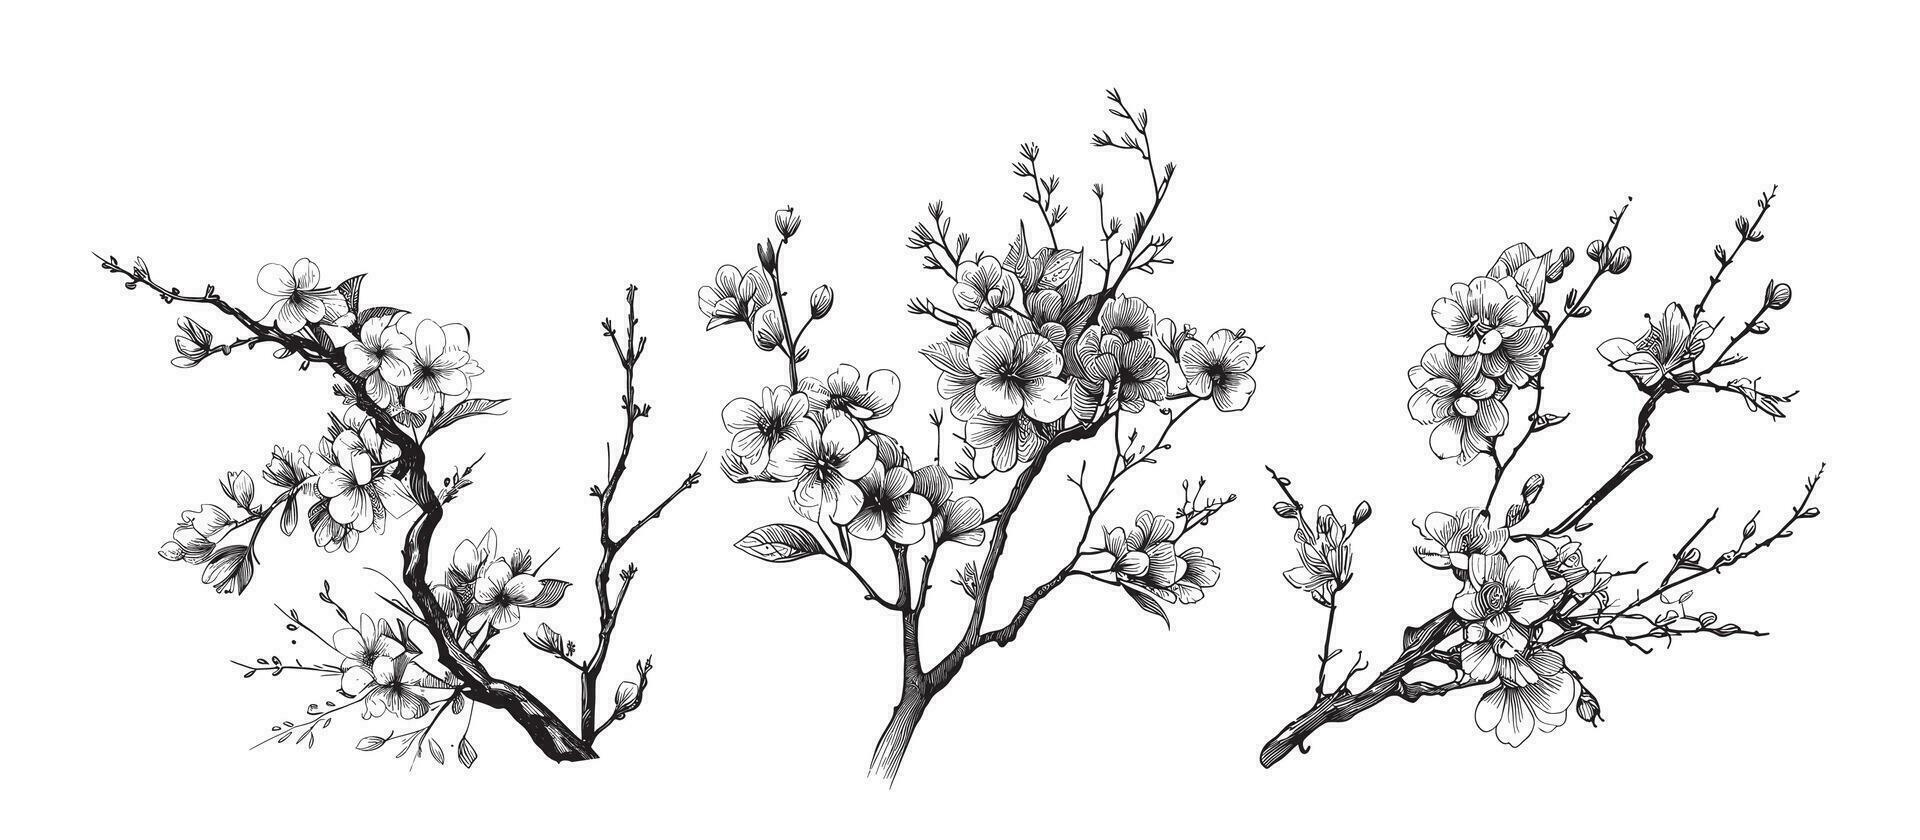 Cherry branch sakura set sketch hand drawn in doodle style Vector illustration